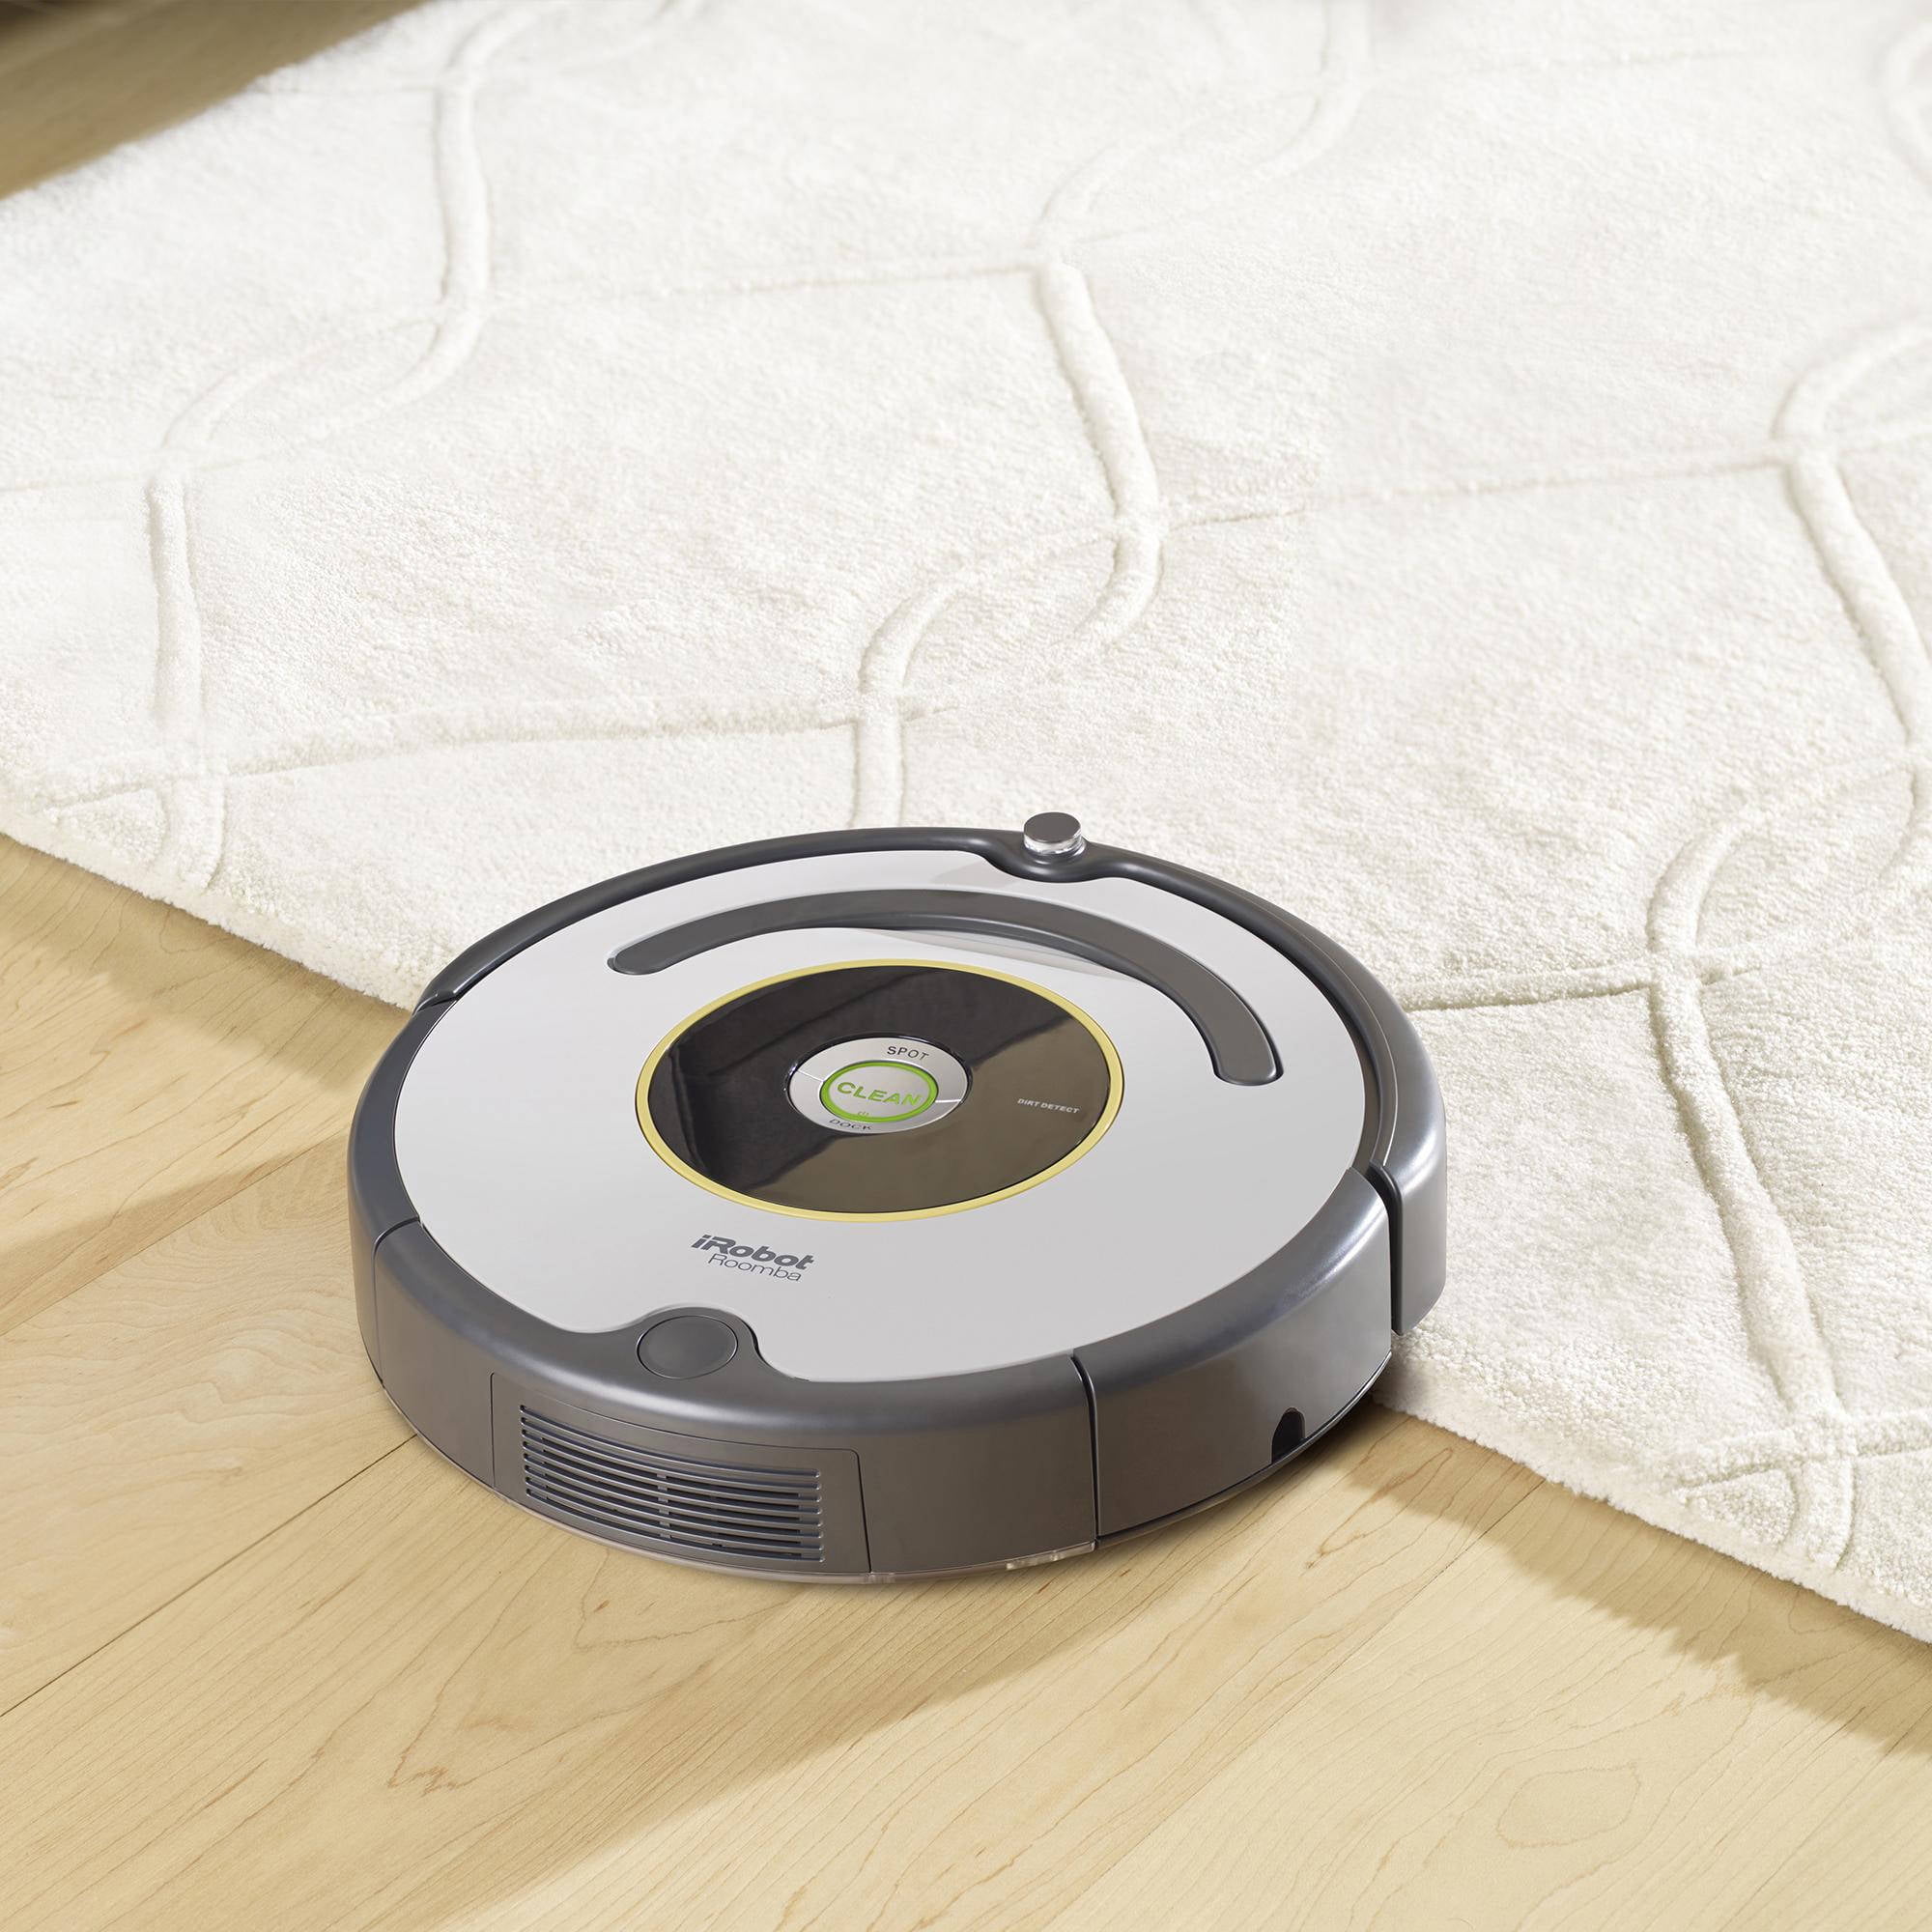 vokal nordøst tapperhed iRobot Roomba 618 Robot Vacuum - Good for Pet Hair, Carpets, Hard Floors,  Self-Charging - Walmart.com